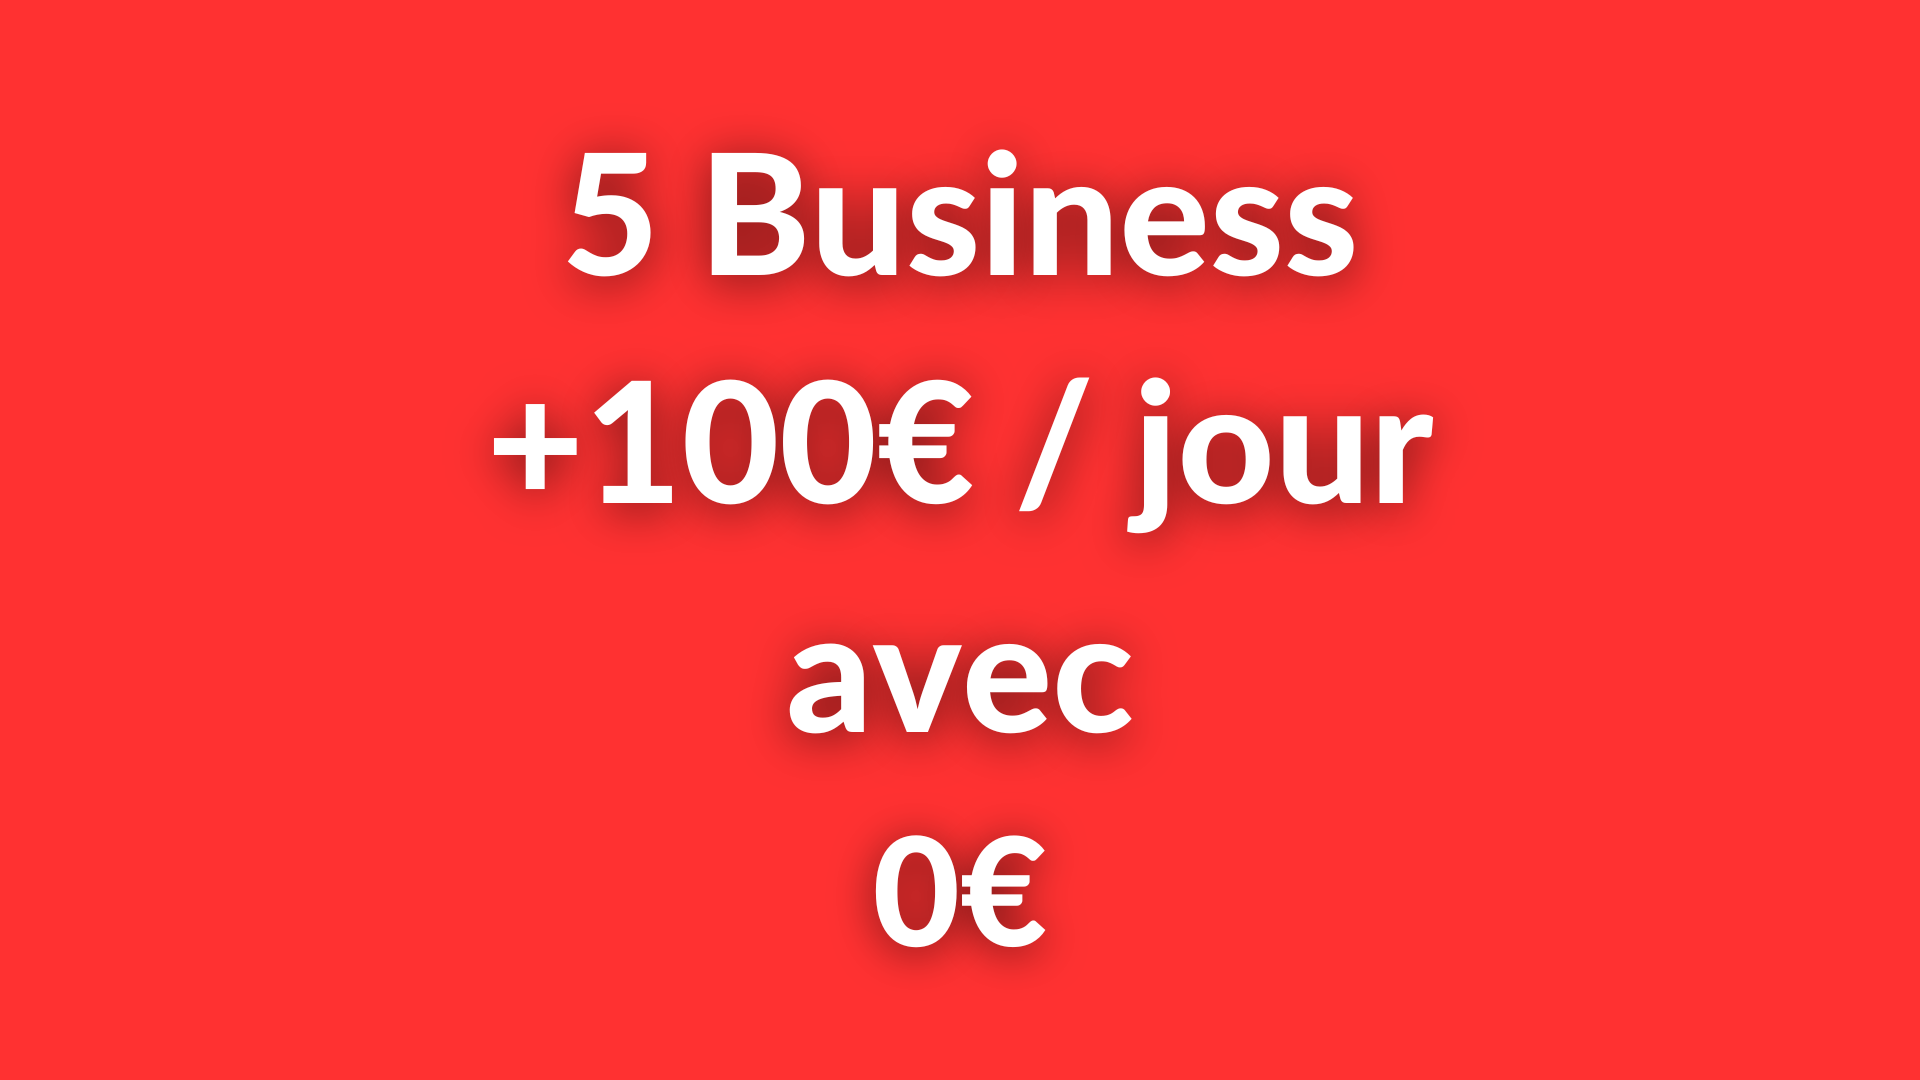 5 business à +100€/jour | 5 Business lucratifs à lancer avec ZÉRO euro